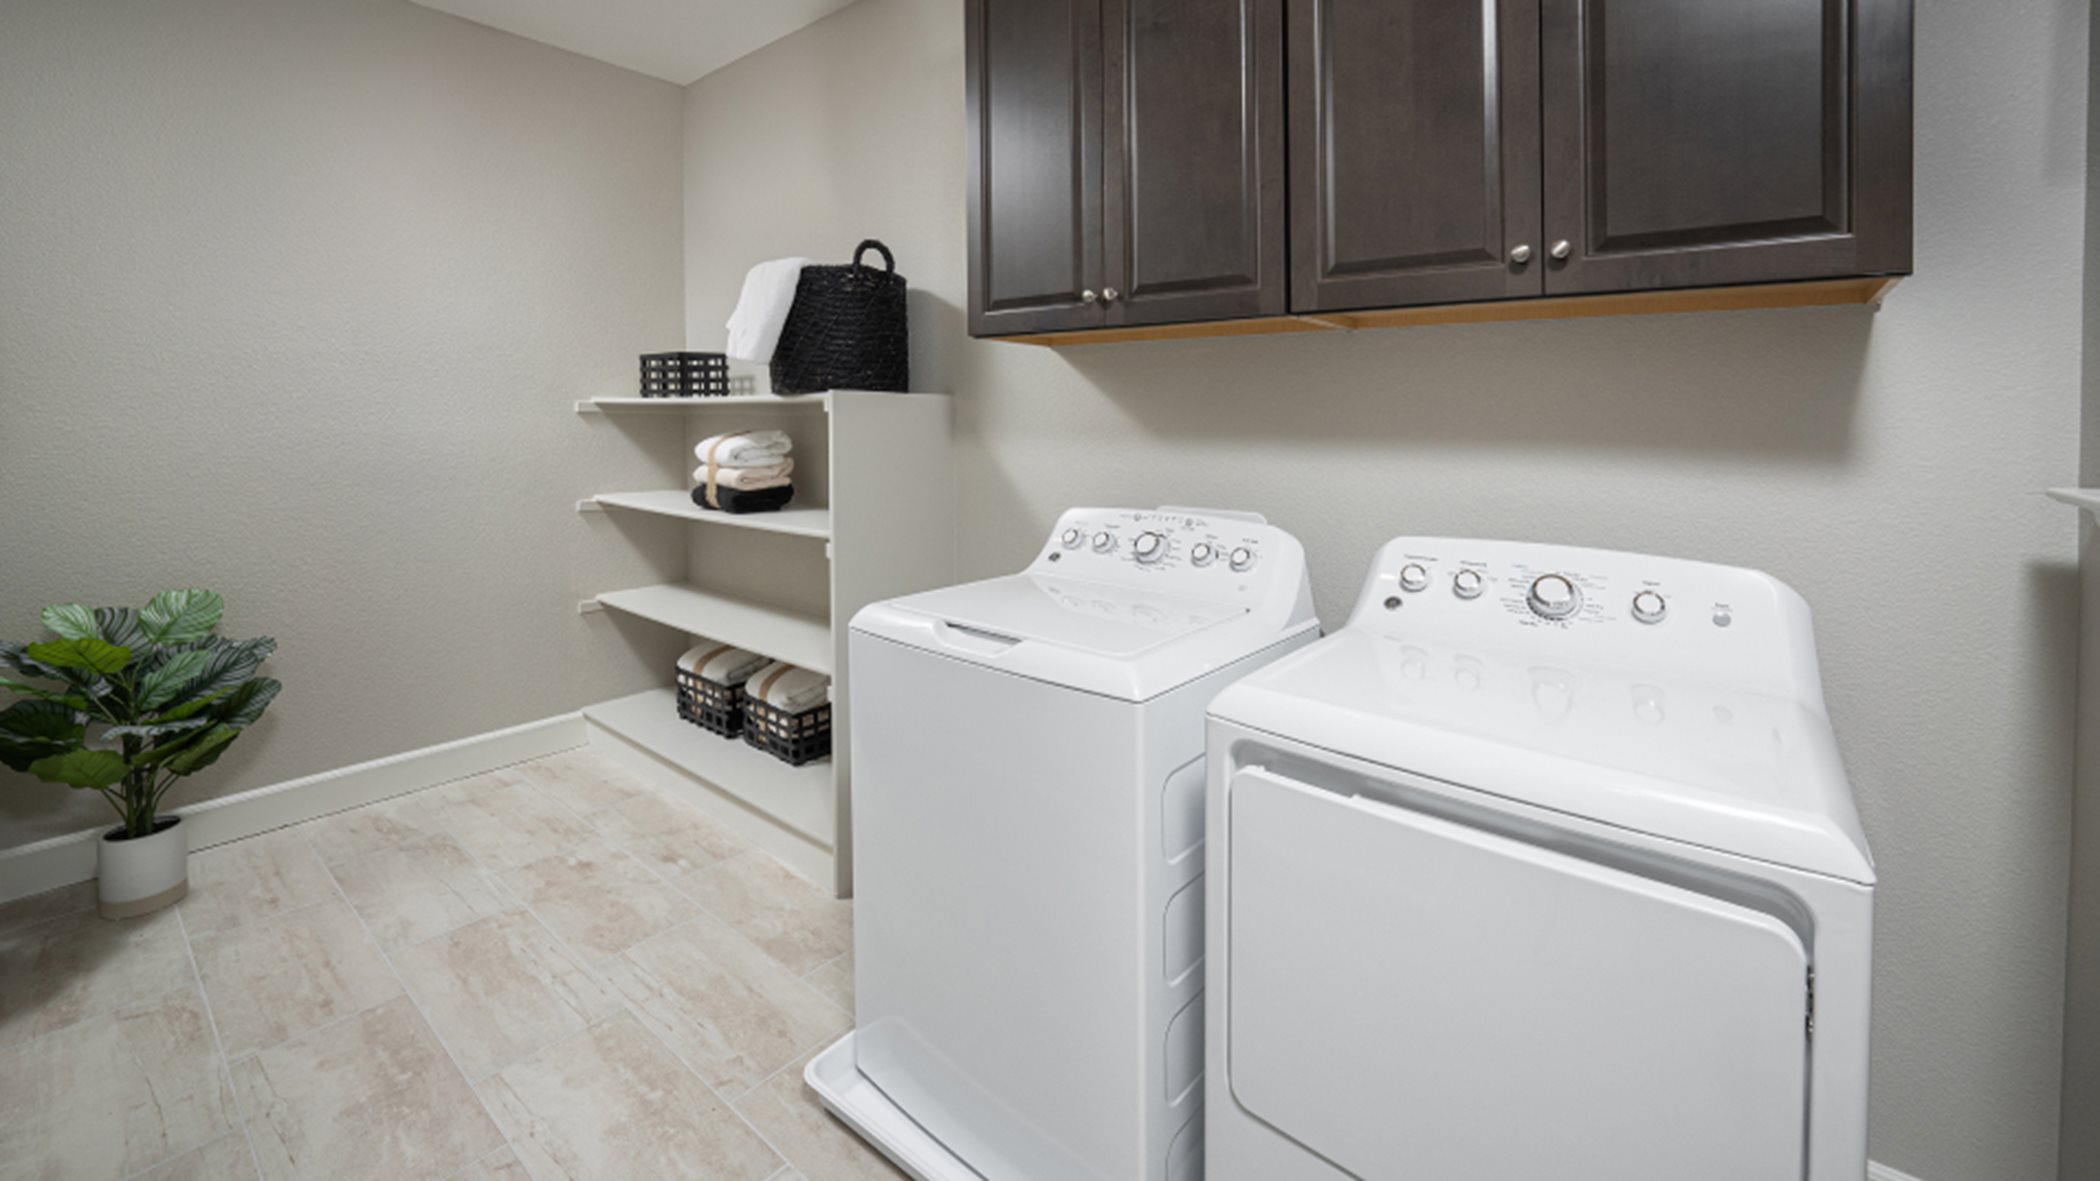 Residence 2190 Laundry